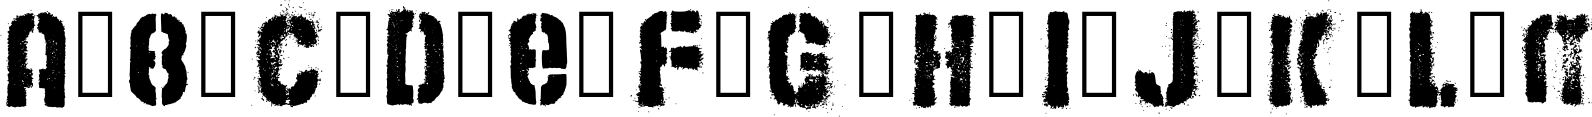 Bams Stencil Font OpenType